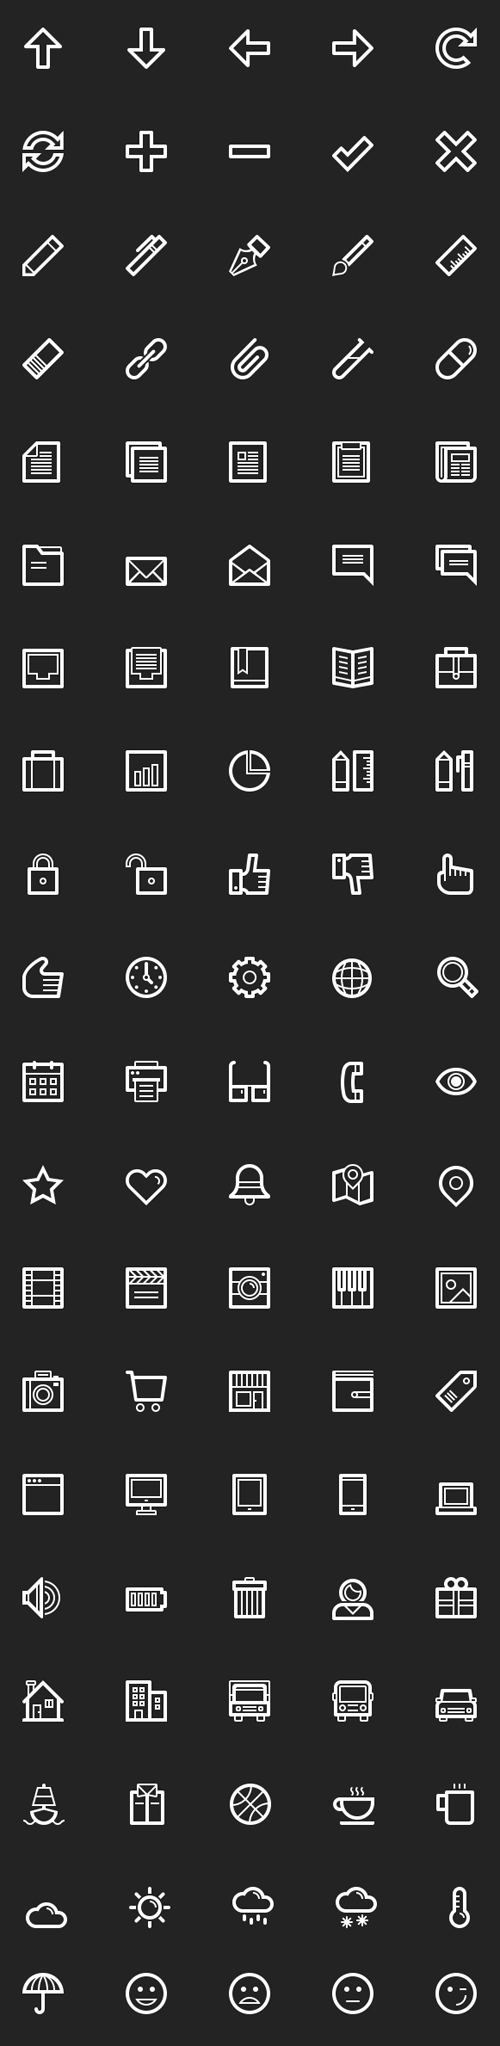 Line Art Icons Set (100 Icons)